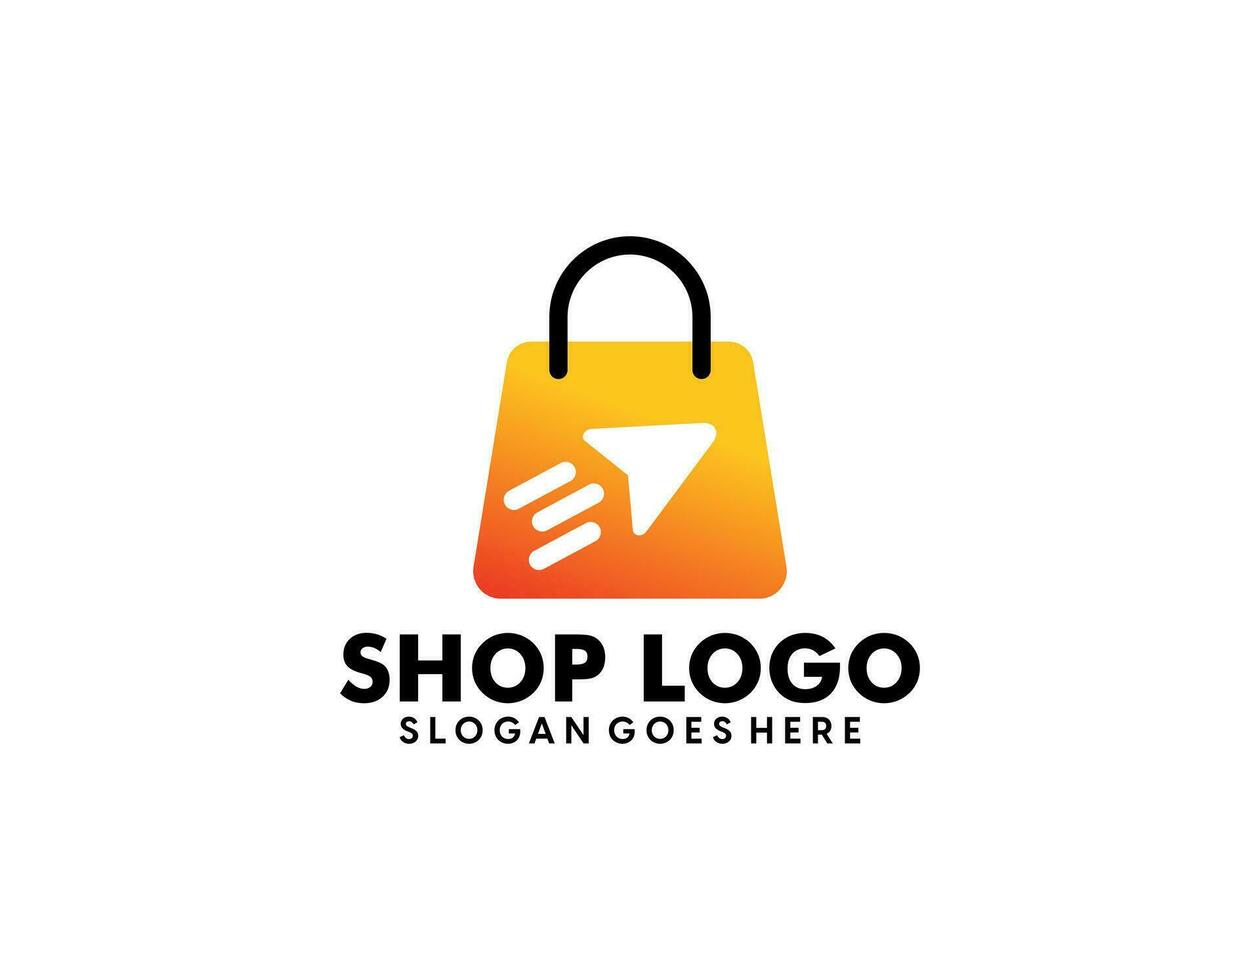 Online Shop logo designs template vector